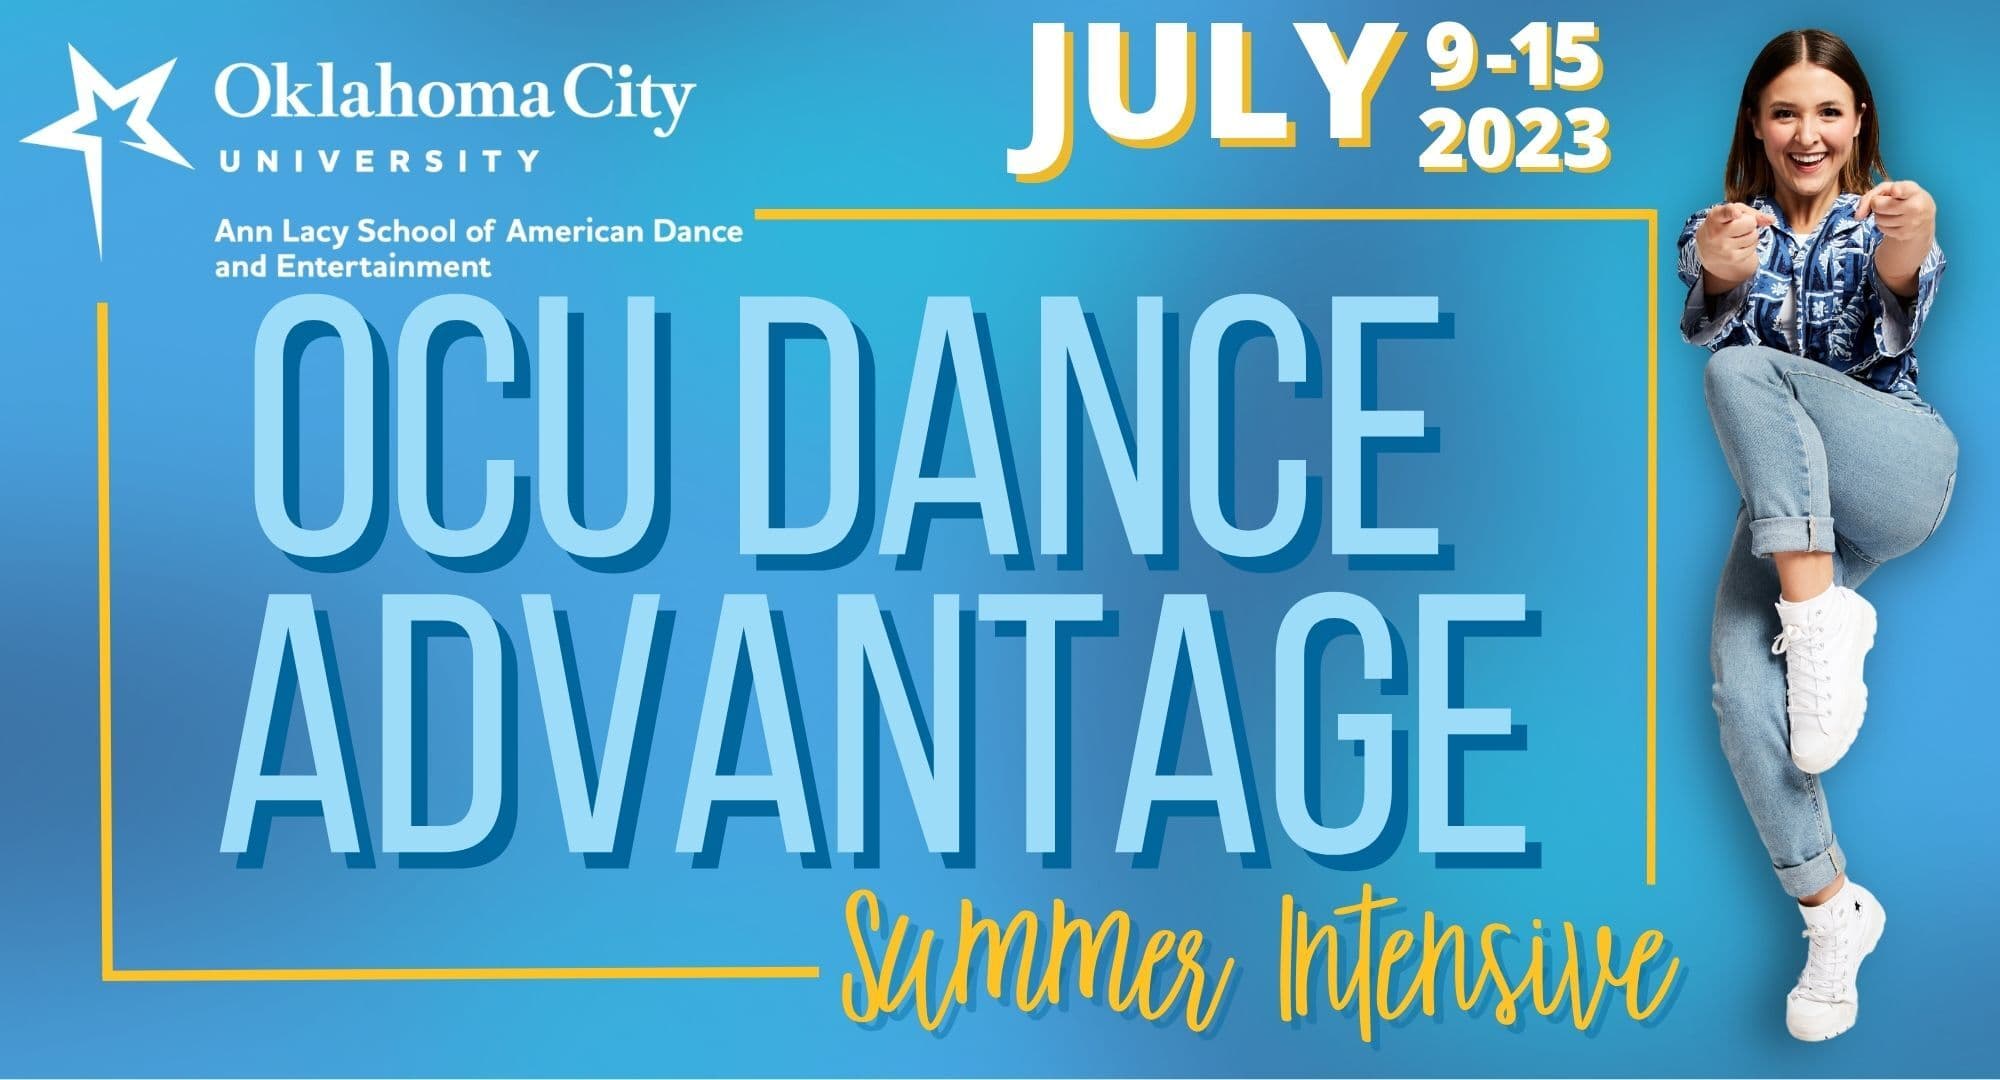 OCU Dance Advantage Postcard graphic